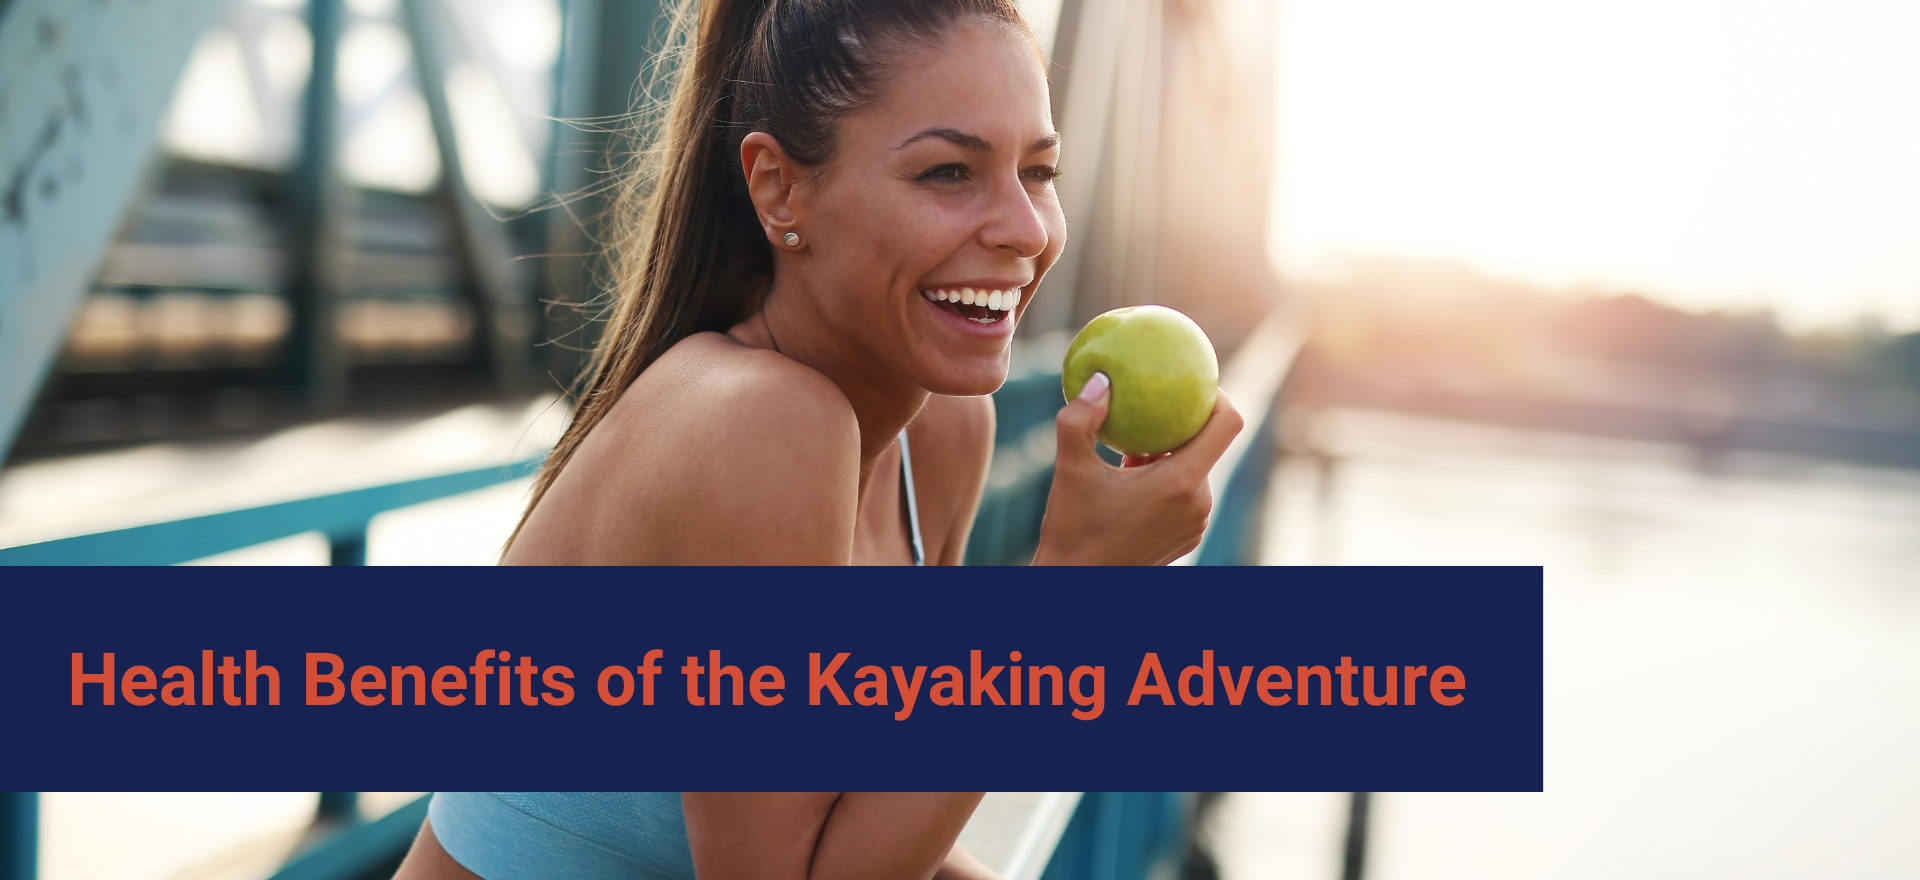 Health Benefits of the Kayaking Adventure